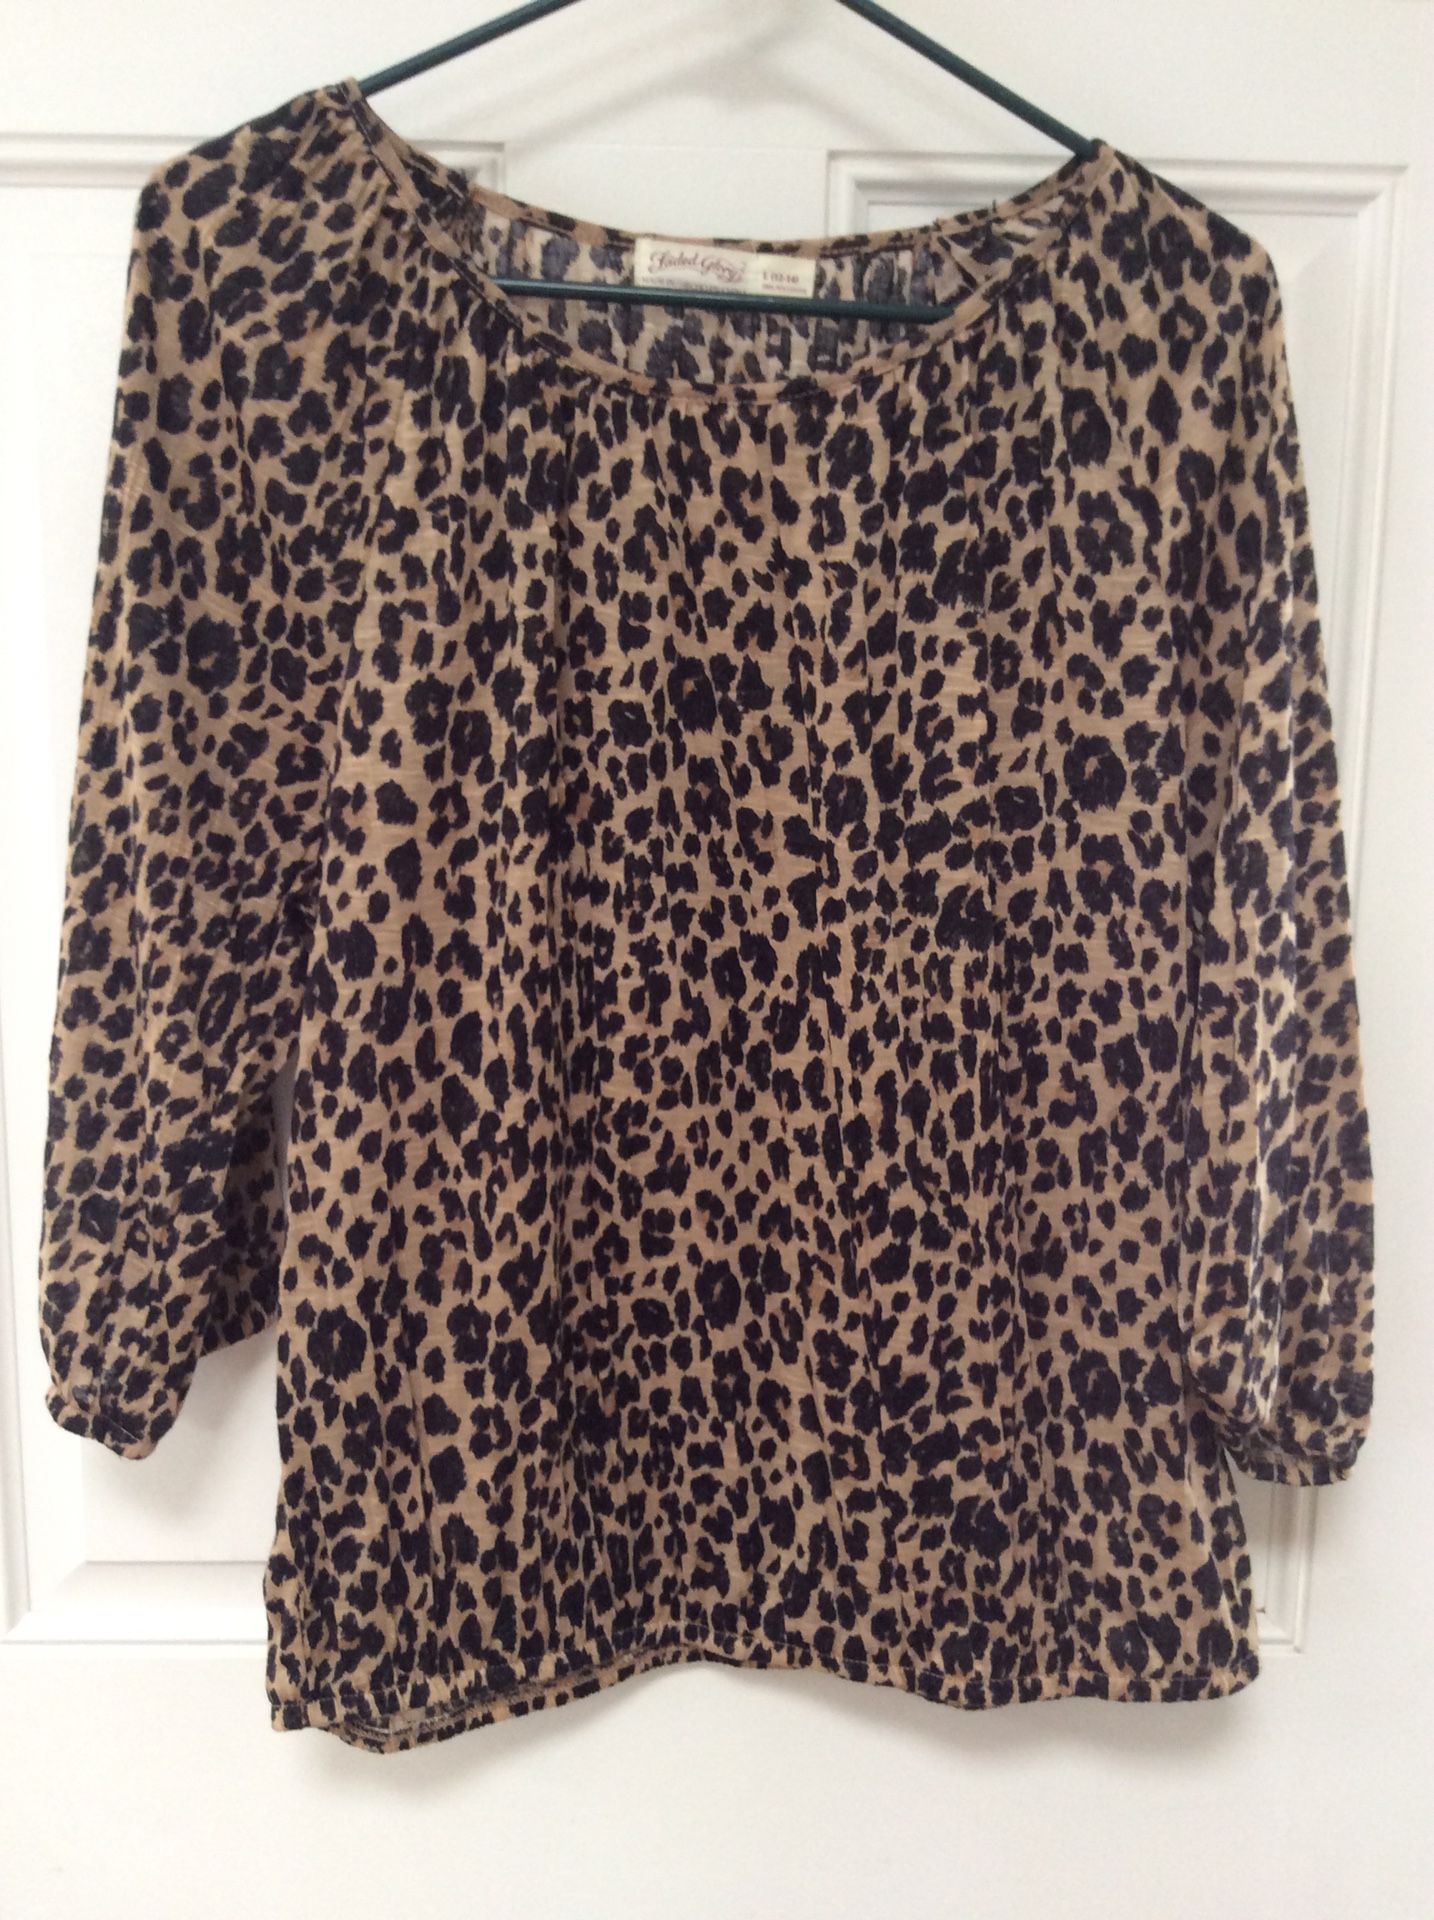 SALE! Leopard women shirt, clothing